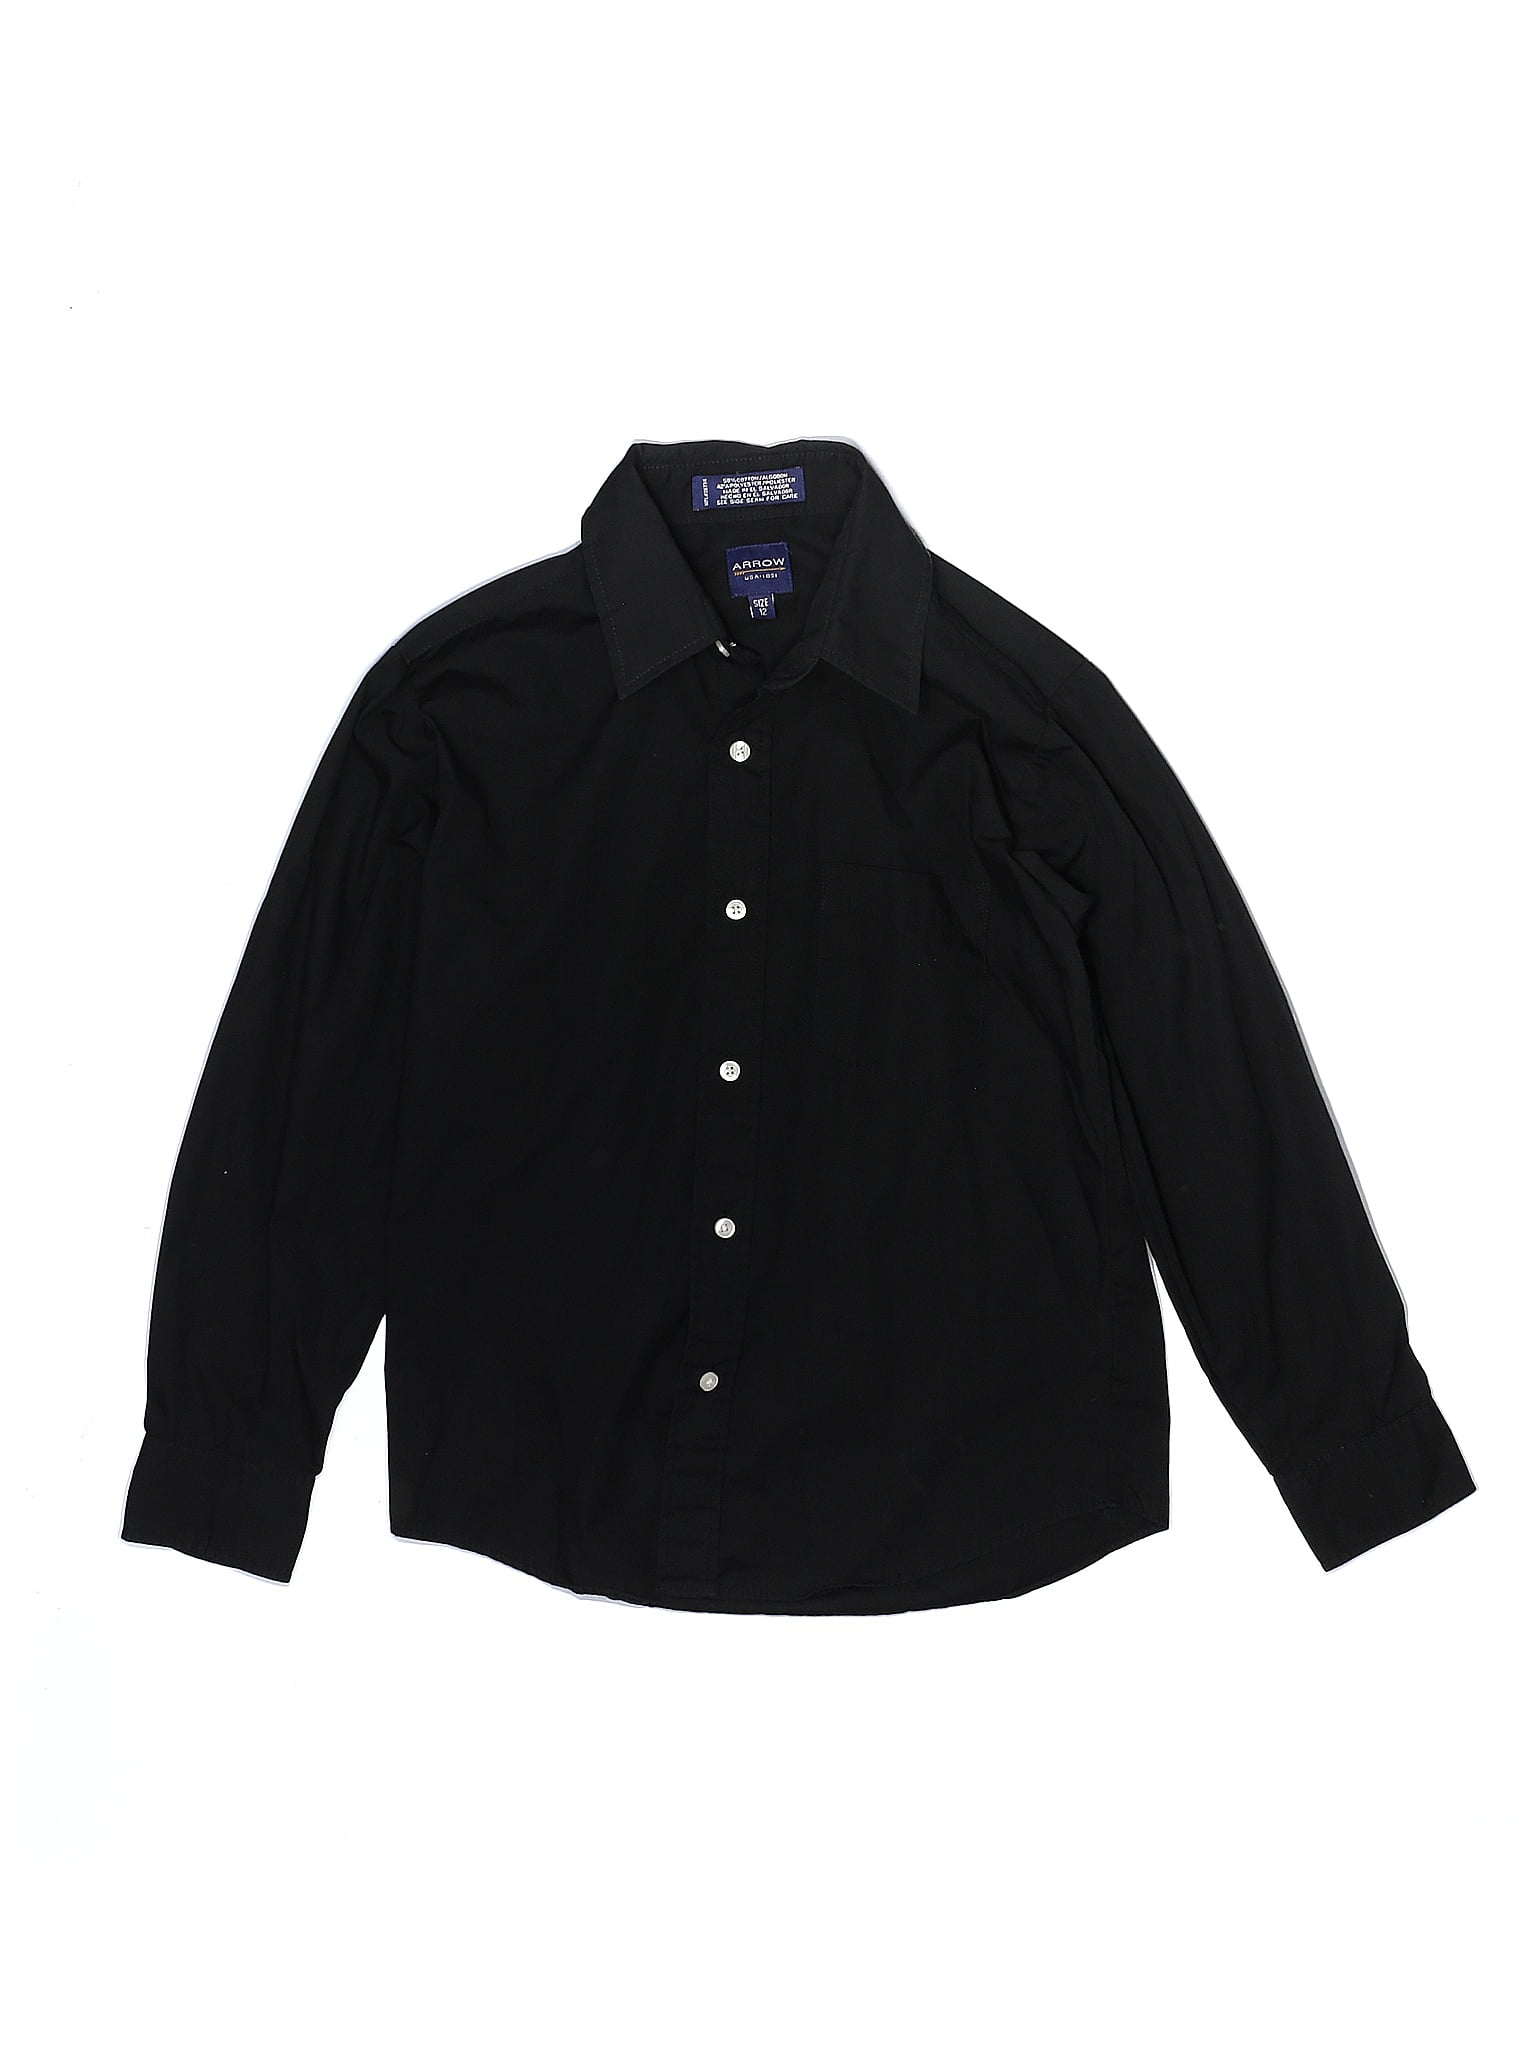 Boys Arrow Brand Black or White Long Sleeve Dress Shirt & Tie Set Size 4 6 